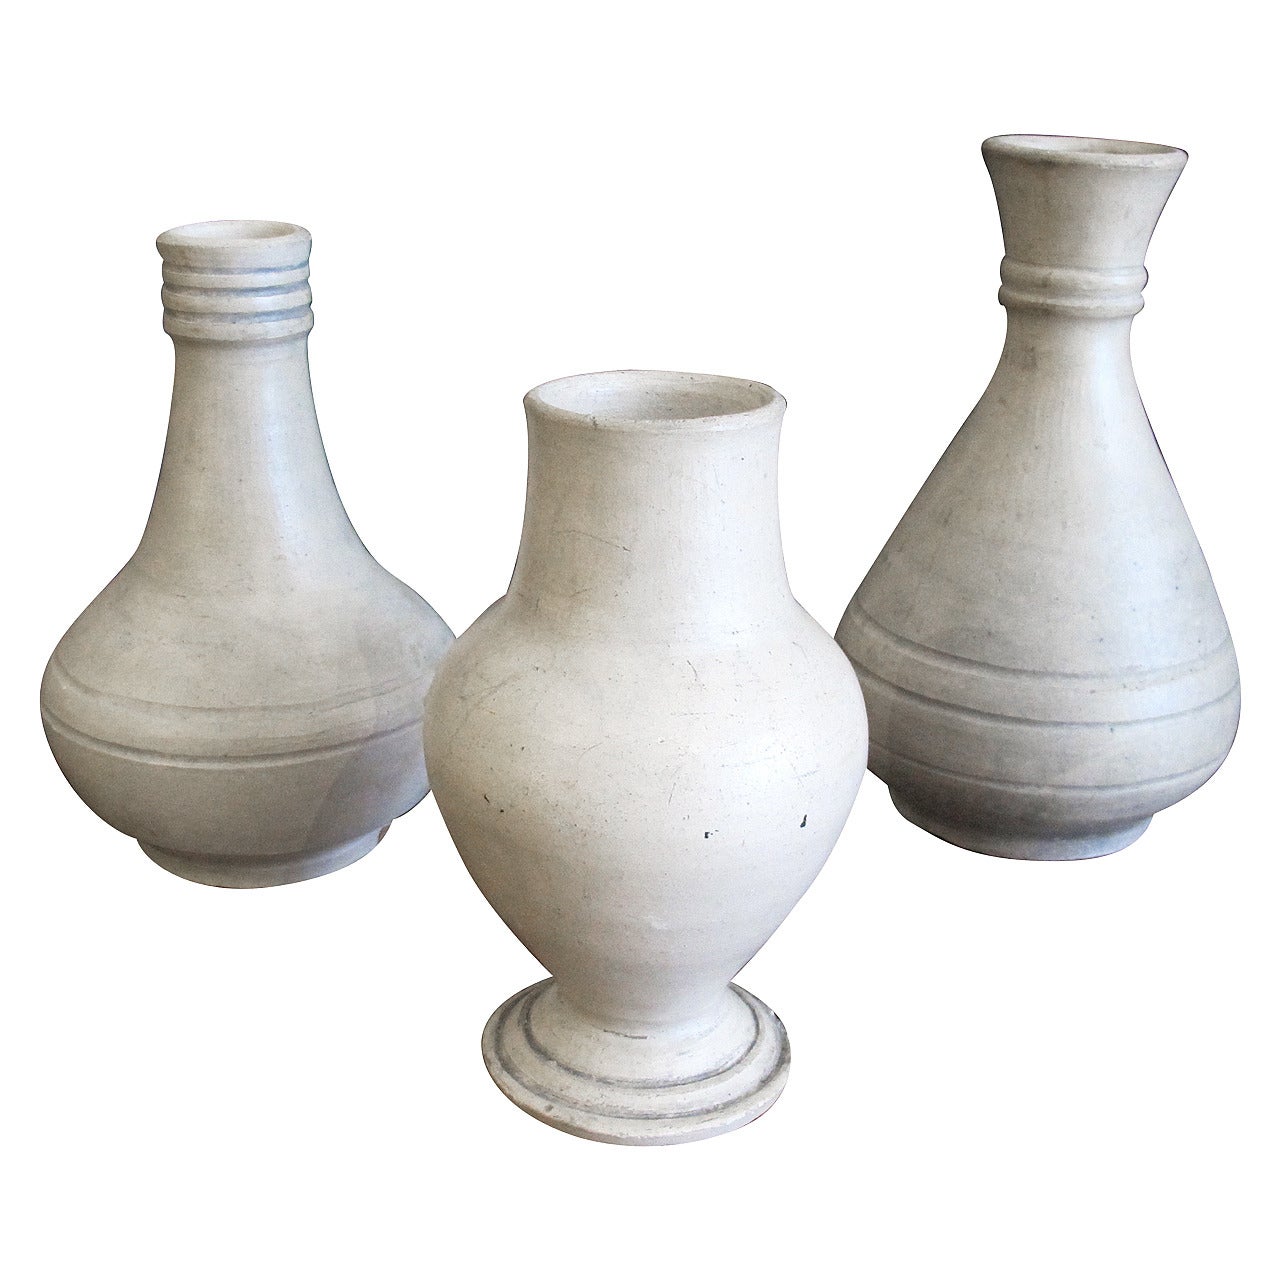 A Set of 3 White Glazed Vases, 'Poteries Martinique'